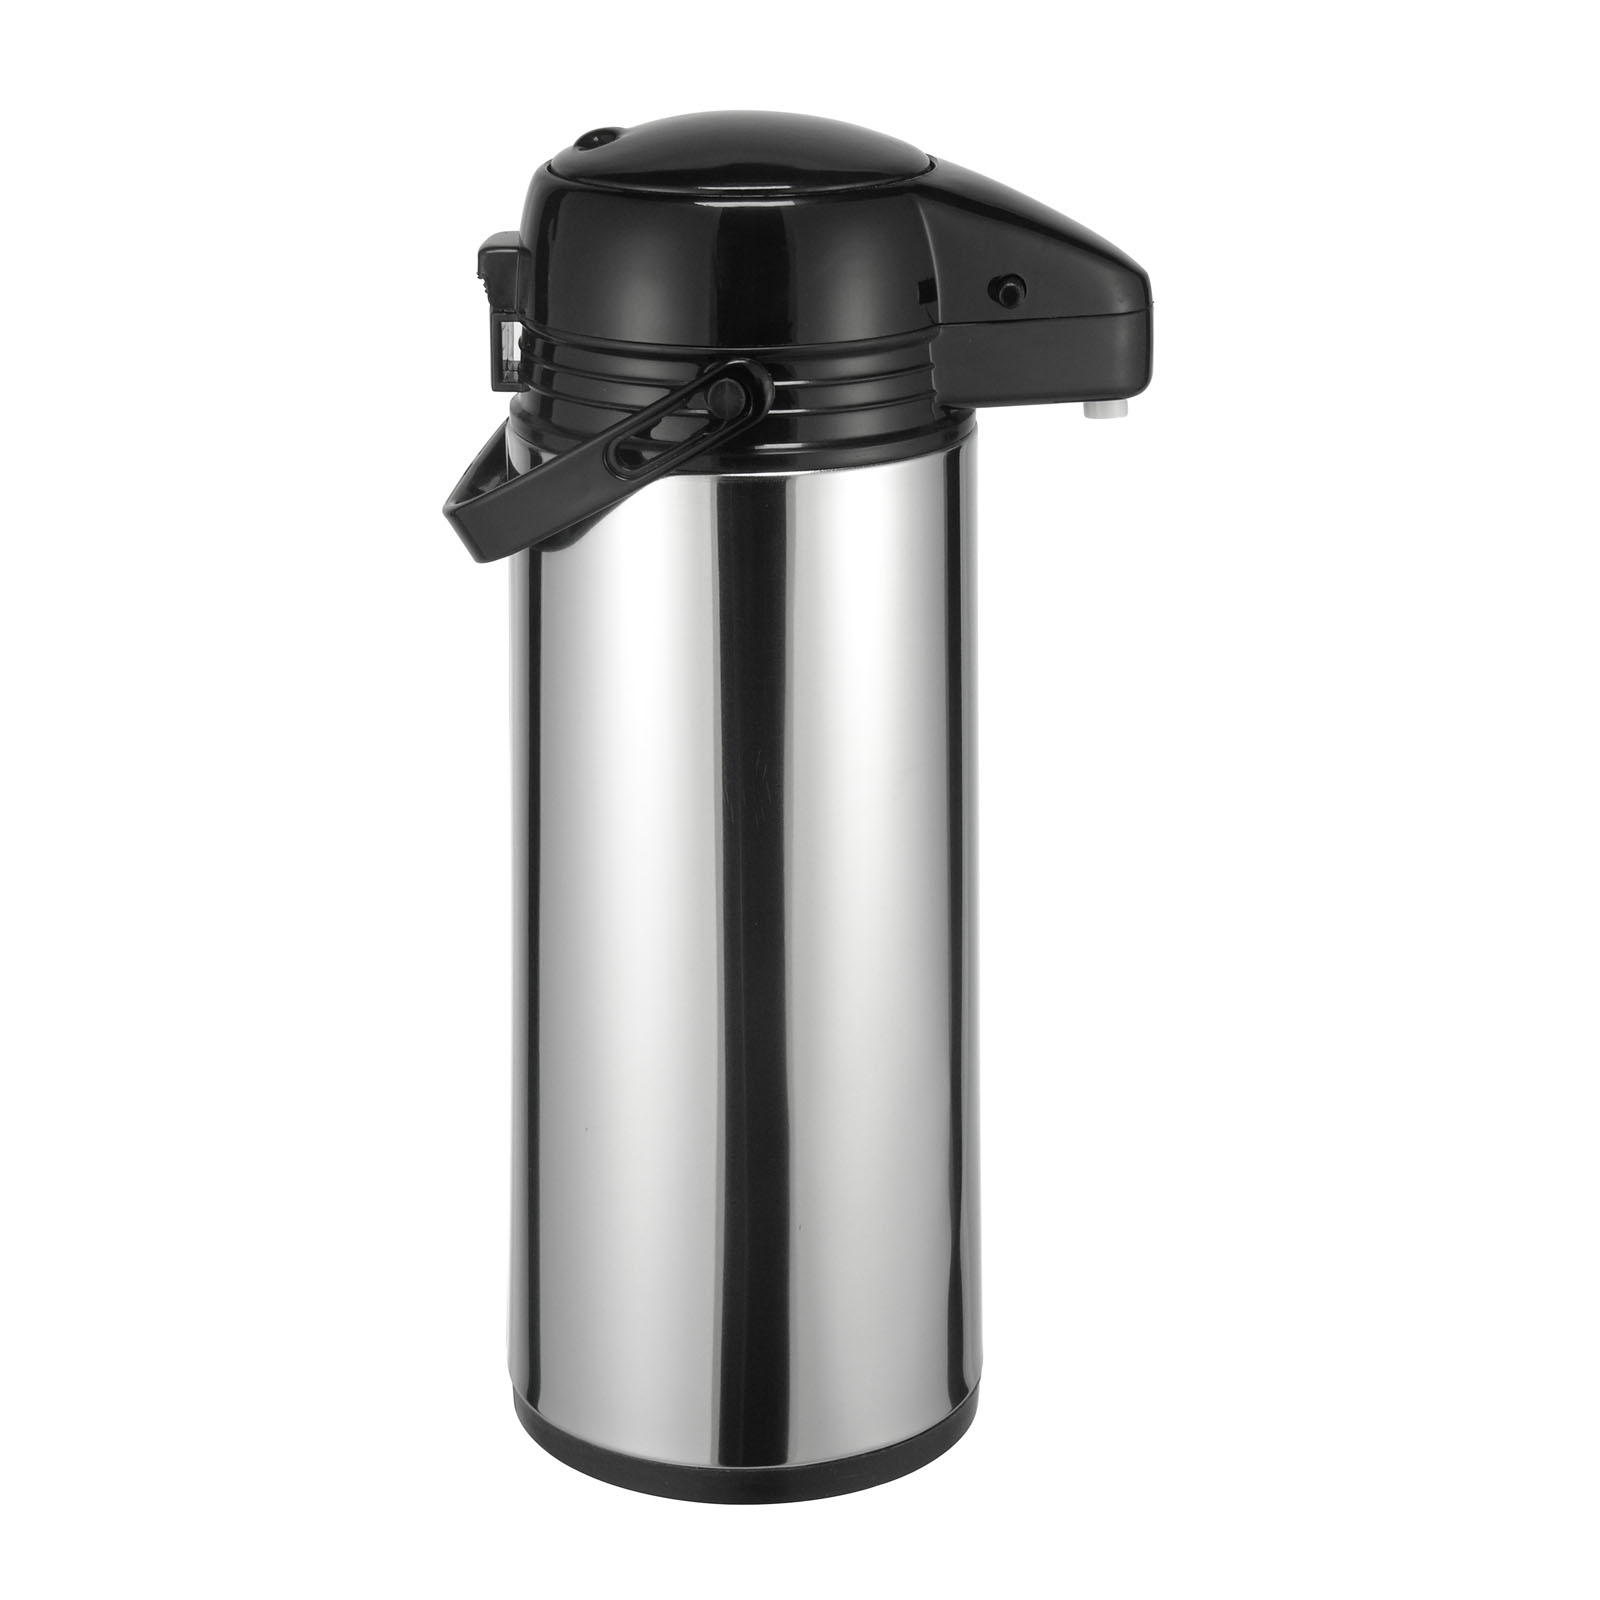 Thermoskanne Pumpkanne Kaffeekanne 1,9l Edelstahl | Airpot_1,9l